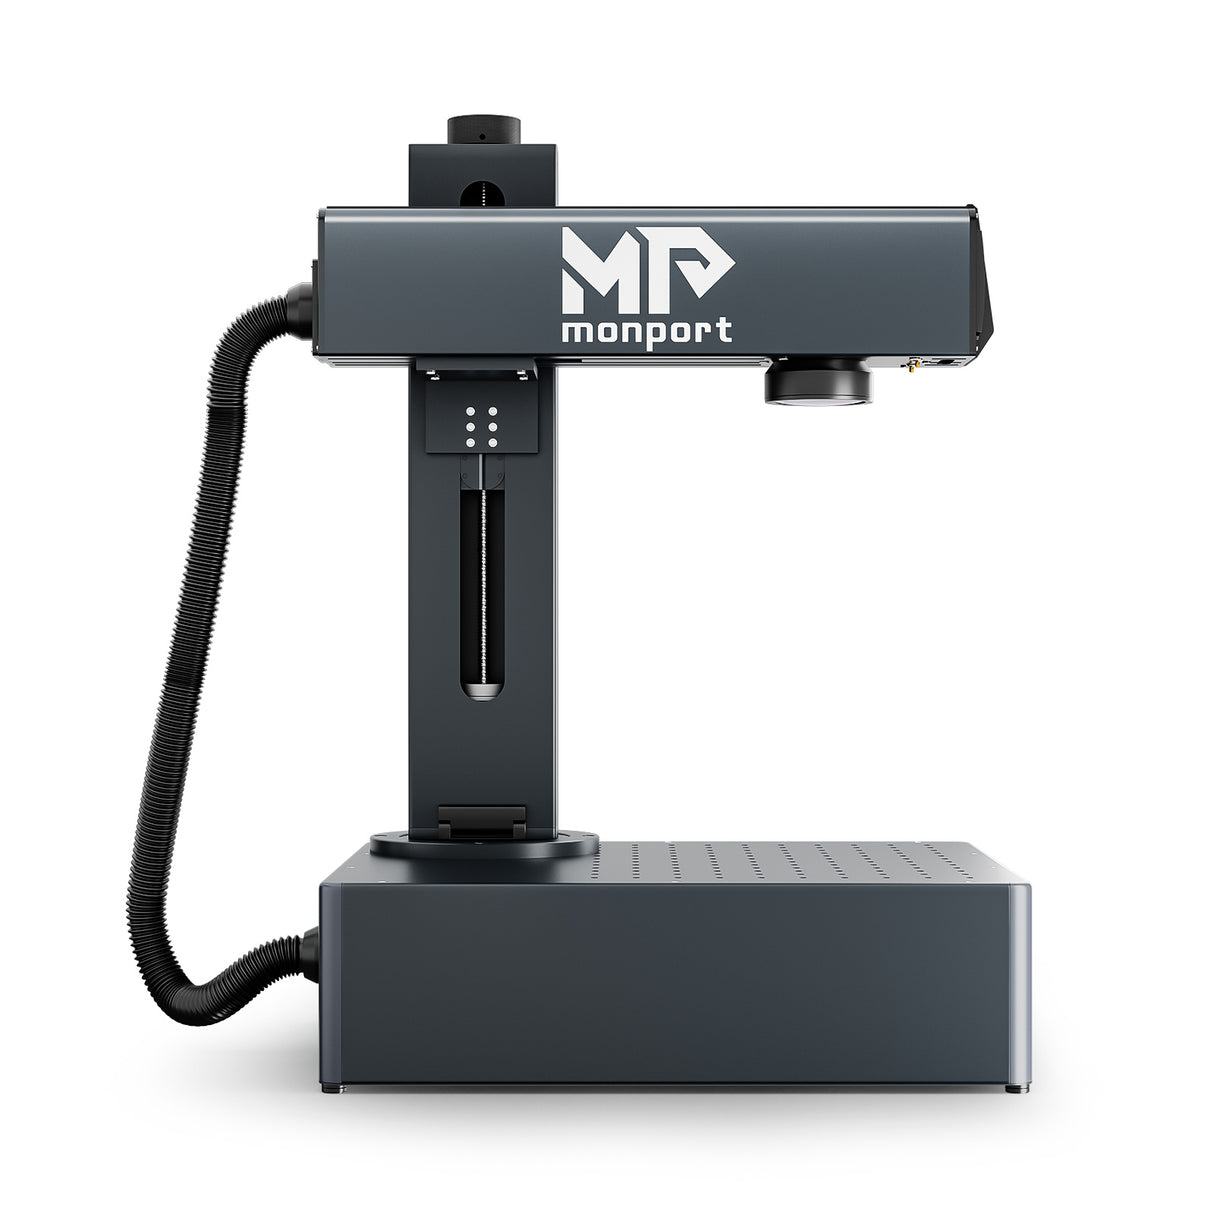 Monport GA 30W Integrated Fiber Laser Engraver & Marking Machines with Auto Focus